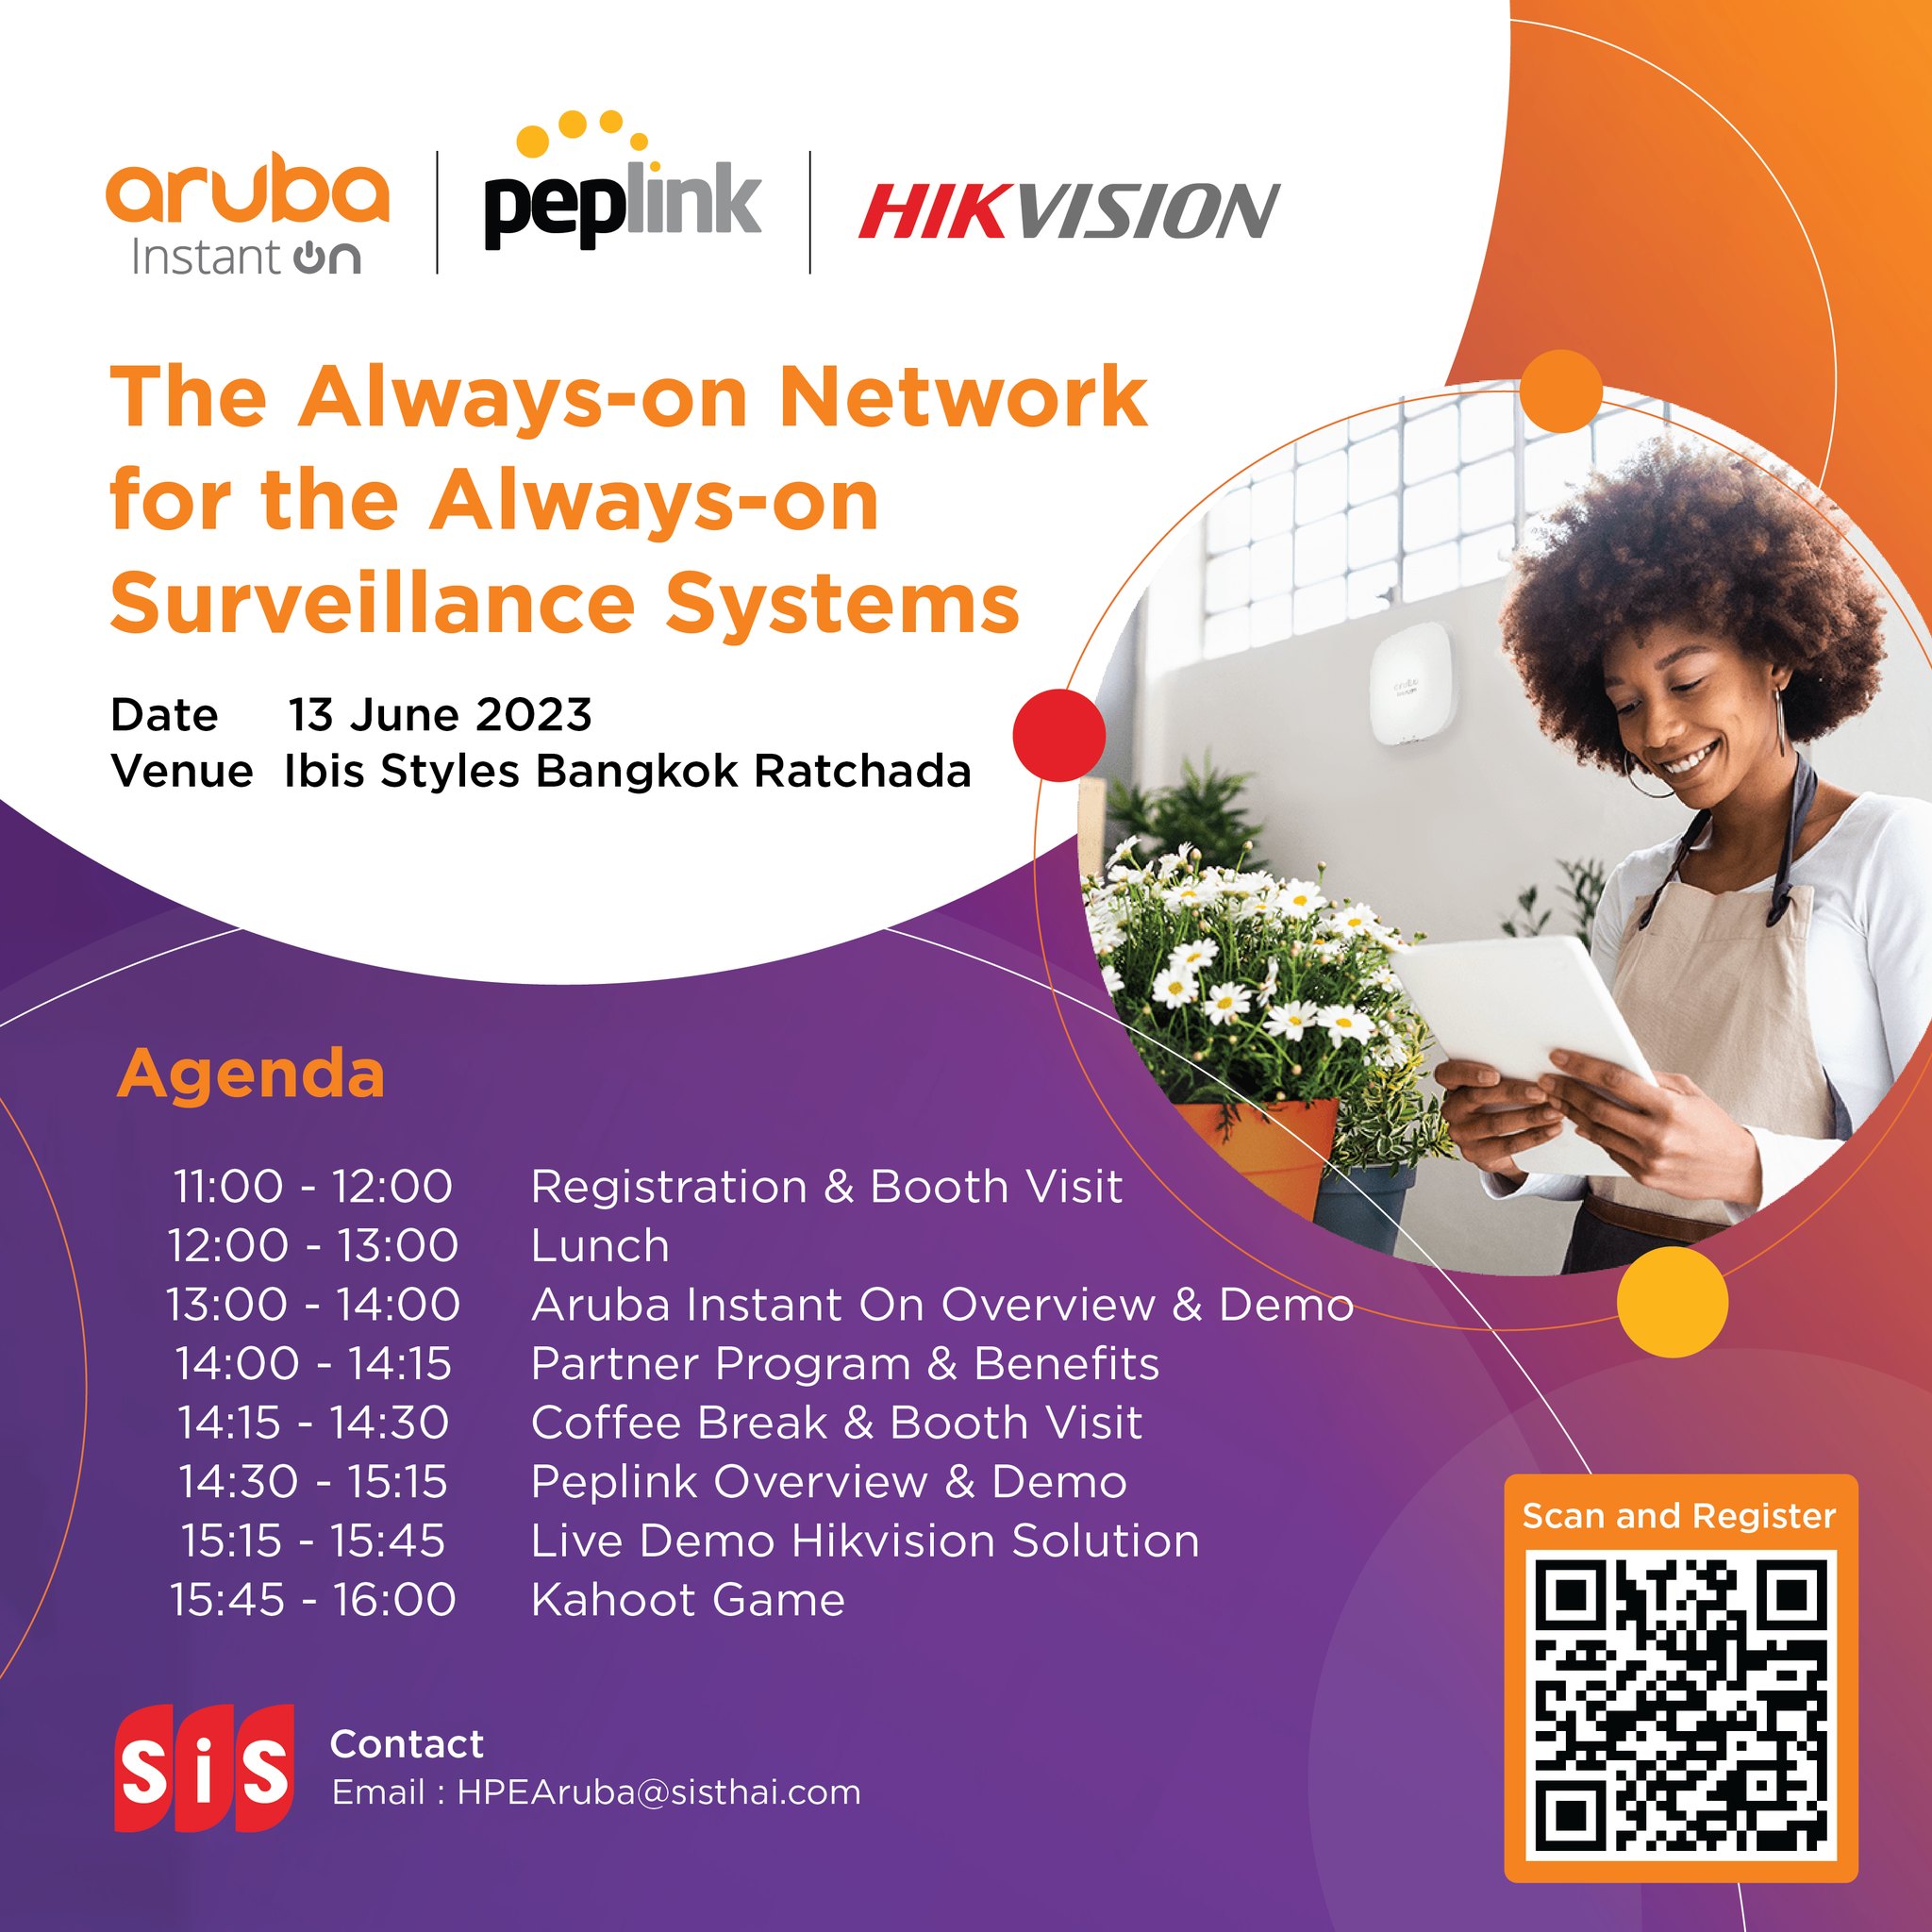 Image:SiS ร่วมกับ Aruba Instant On, Hikvision และ 
Peplink ขอขอบคุณพาร์ตเนอร์ที่เข้าร่วมงานสัมมนา The Always-on Network for the 
Always-on Surveillance Systems